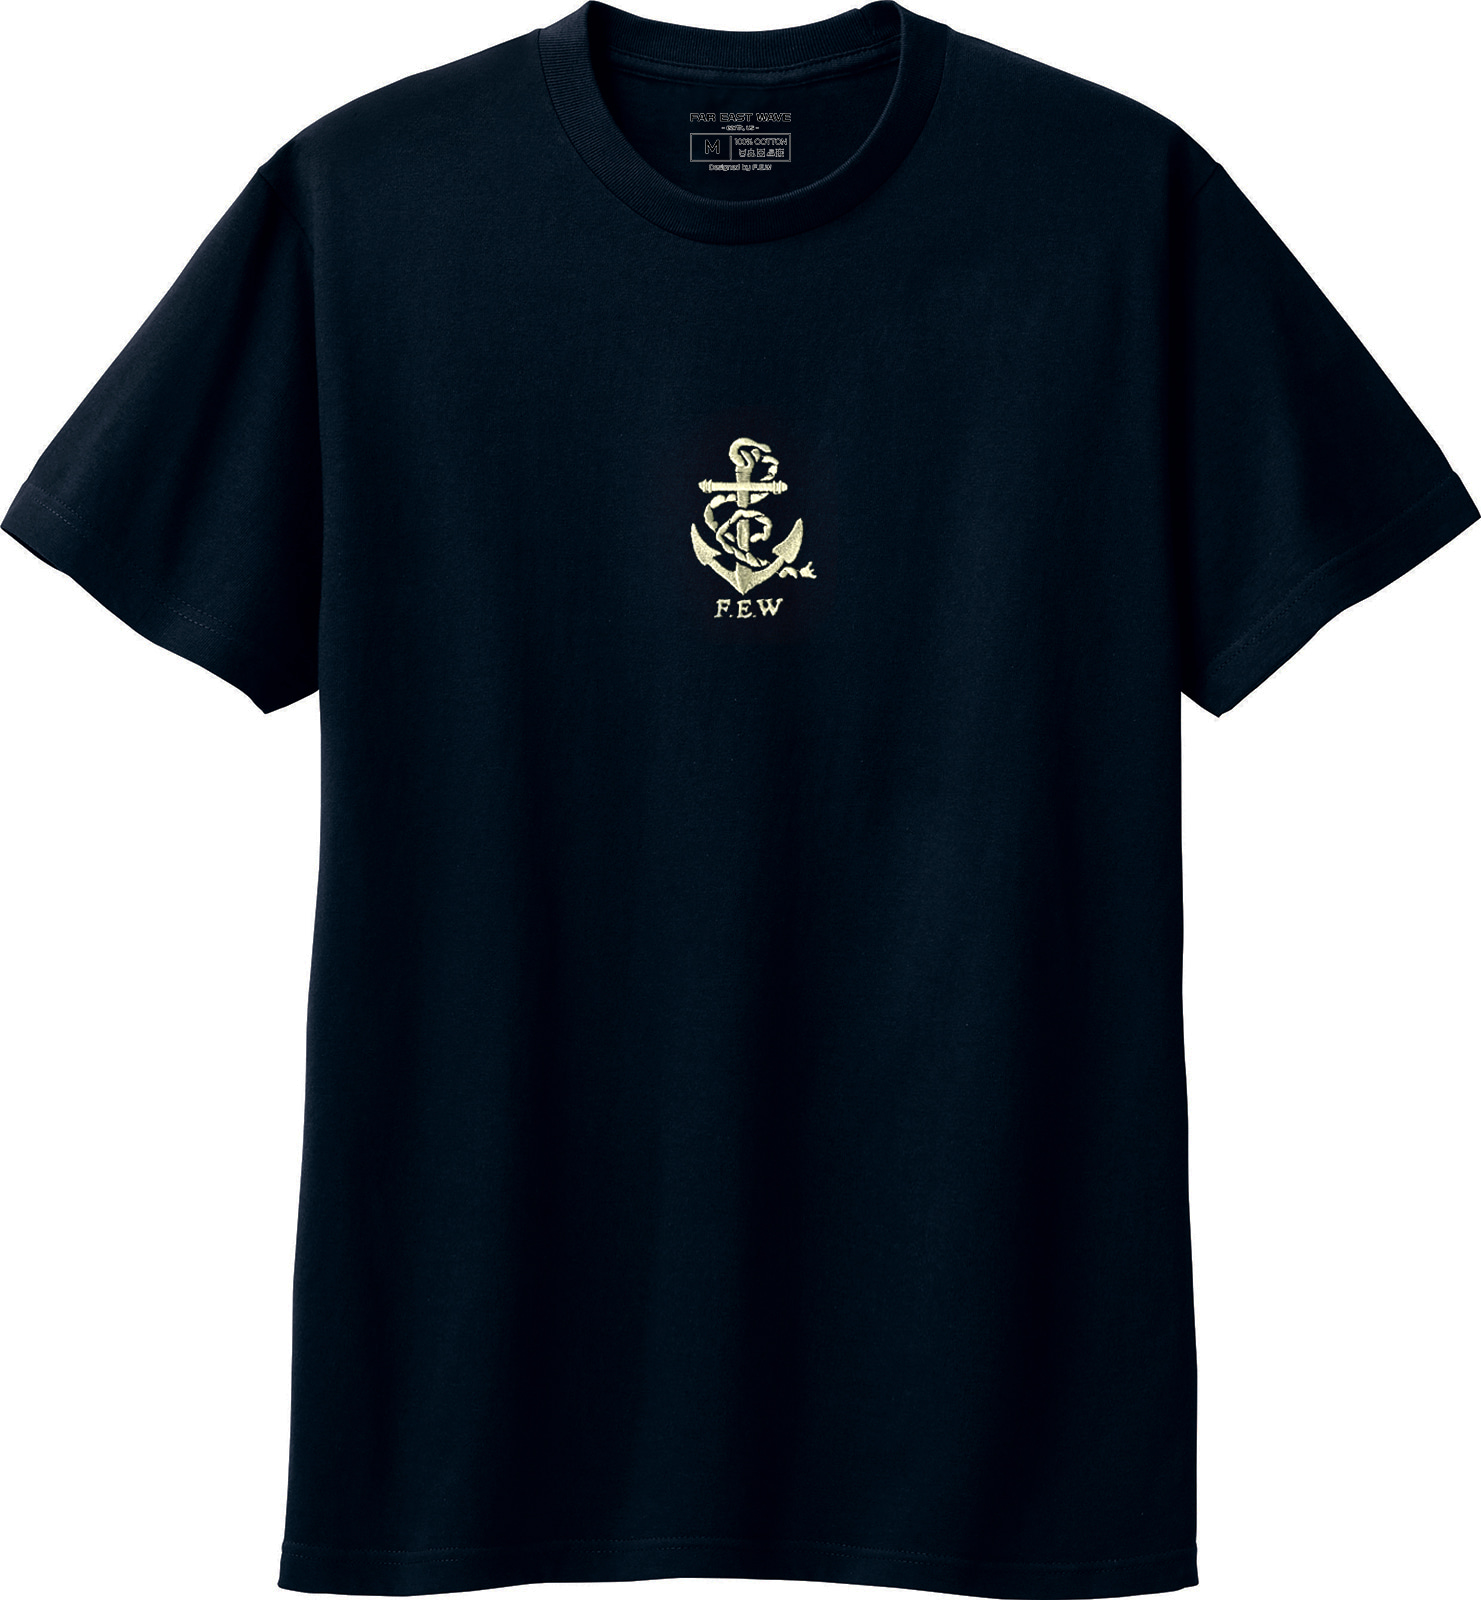 F.E.W Anchor T-shirt(navy)